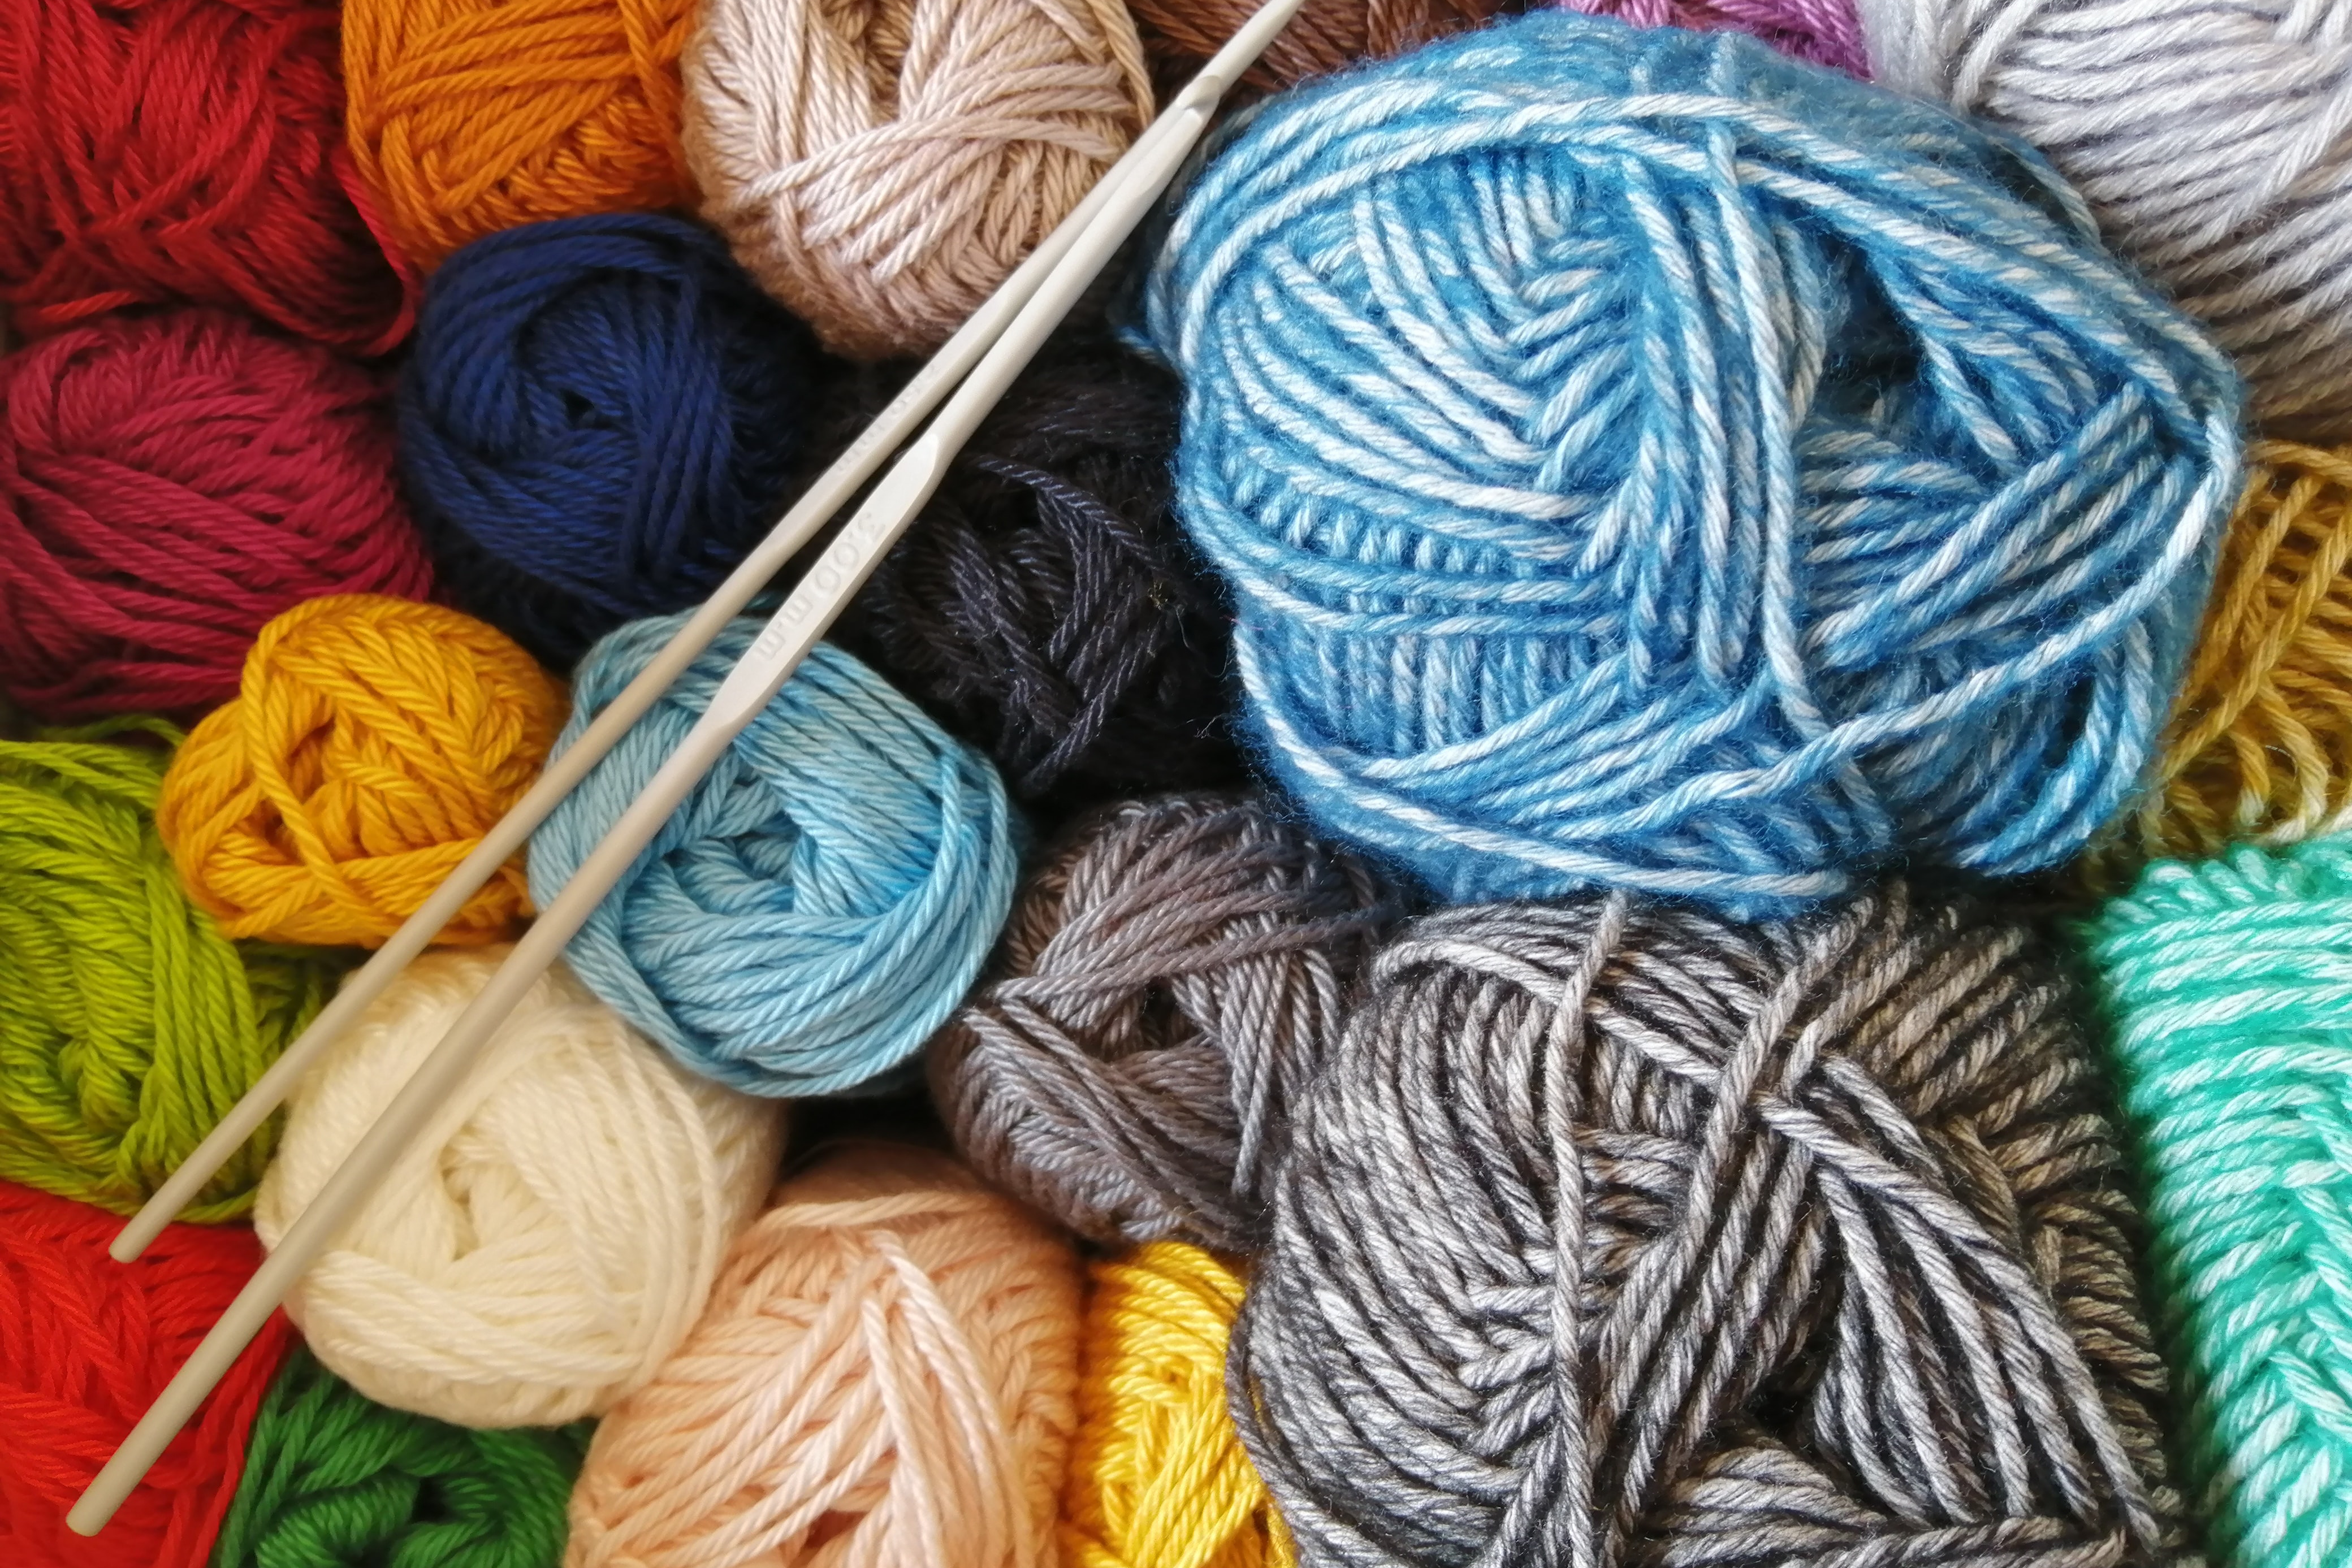 Balls of wool and crochet hooks